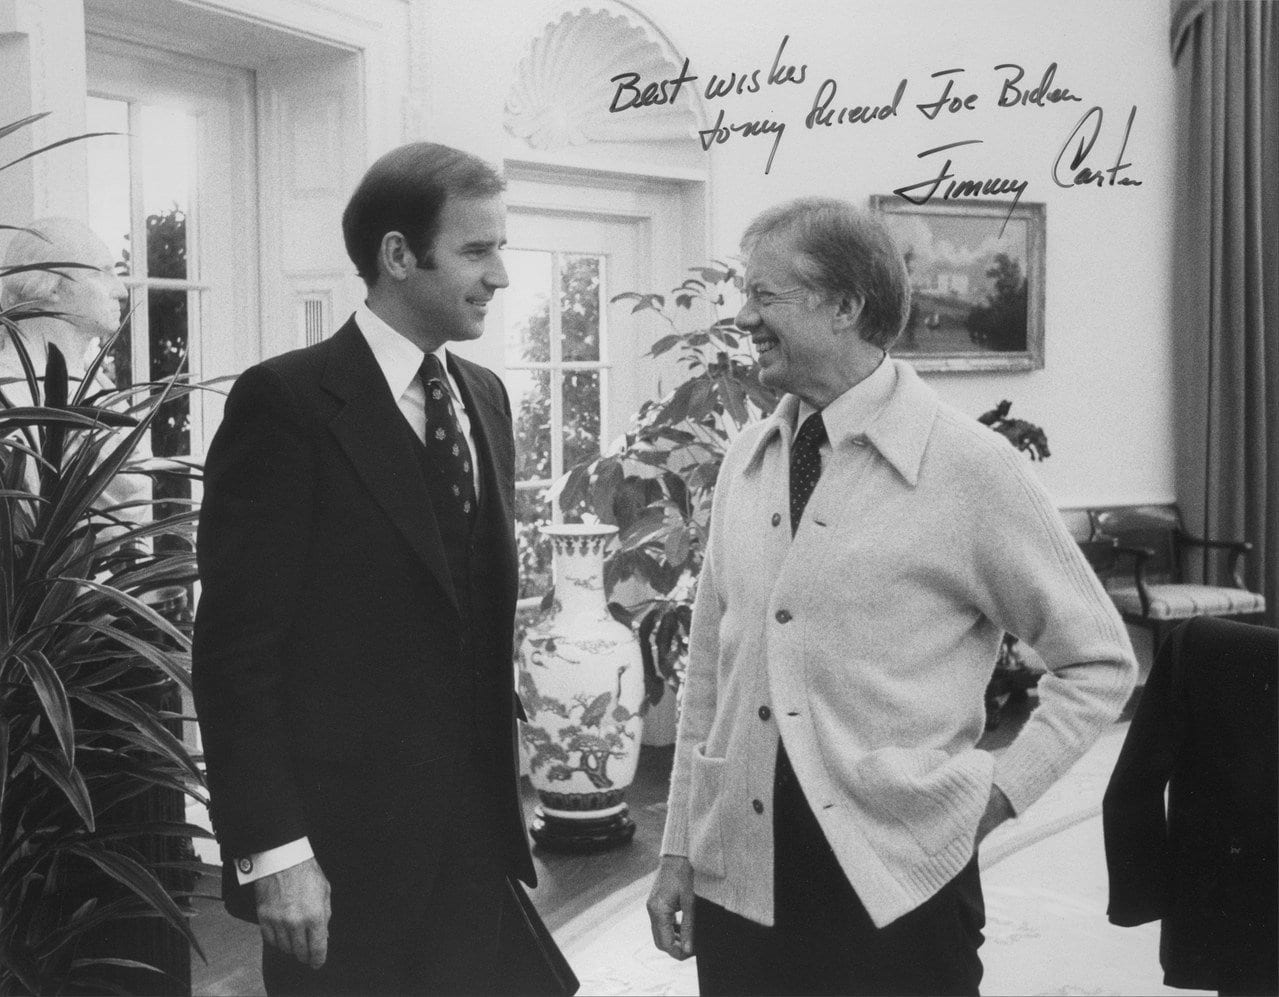 Jimmy Carter & Joe Biden